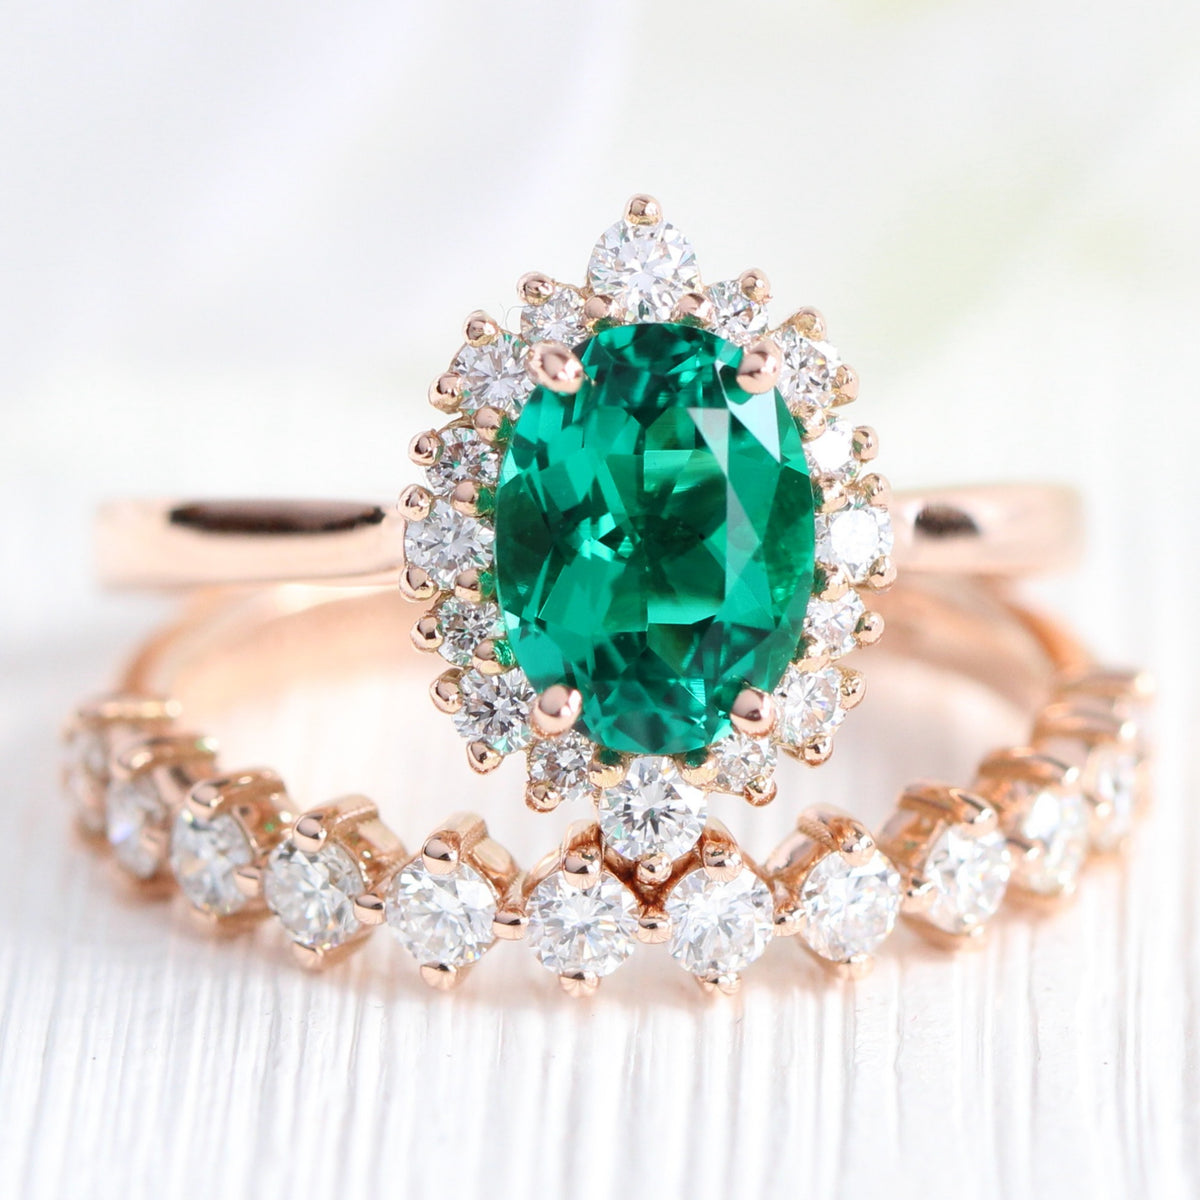 Halo diamond emerald ring stock rose gold matching wedding band la more design jewelry